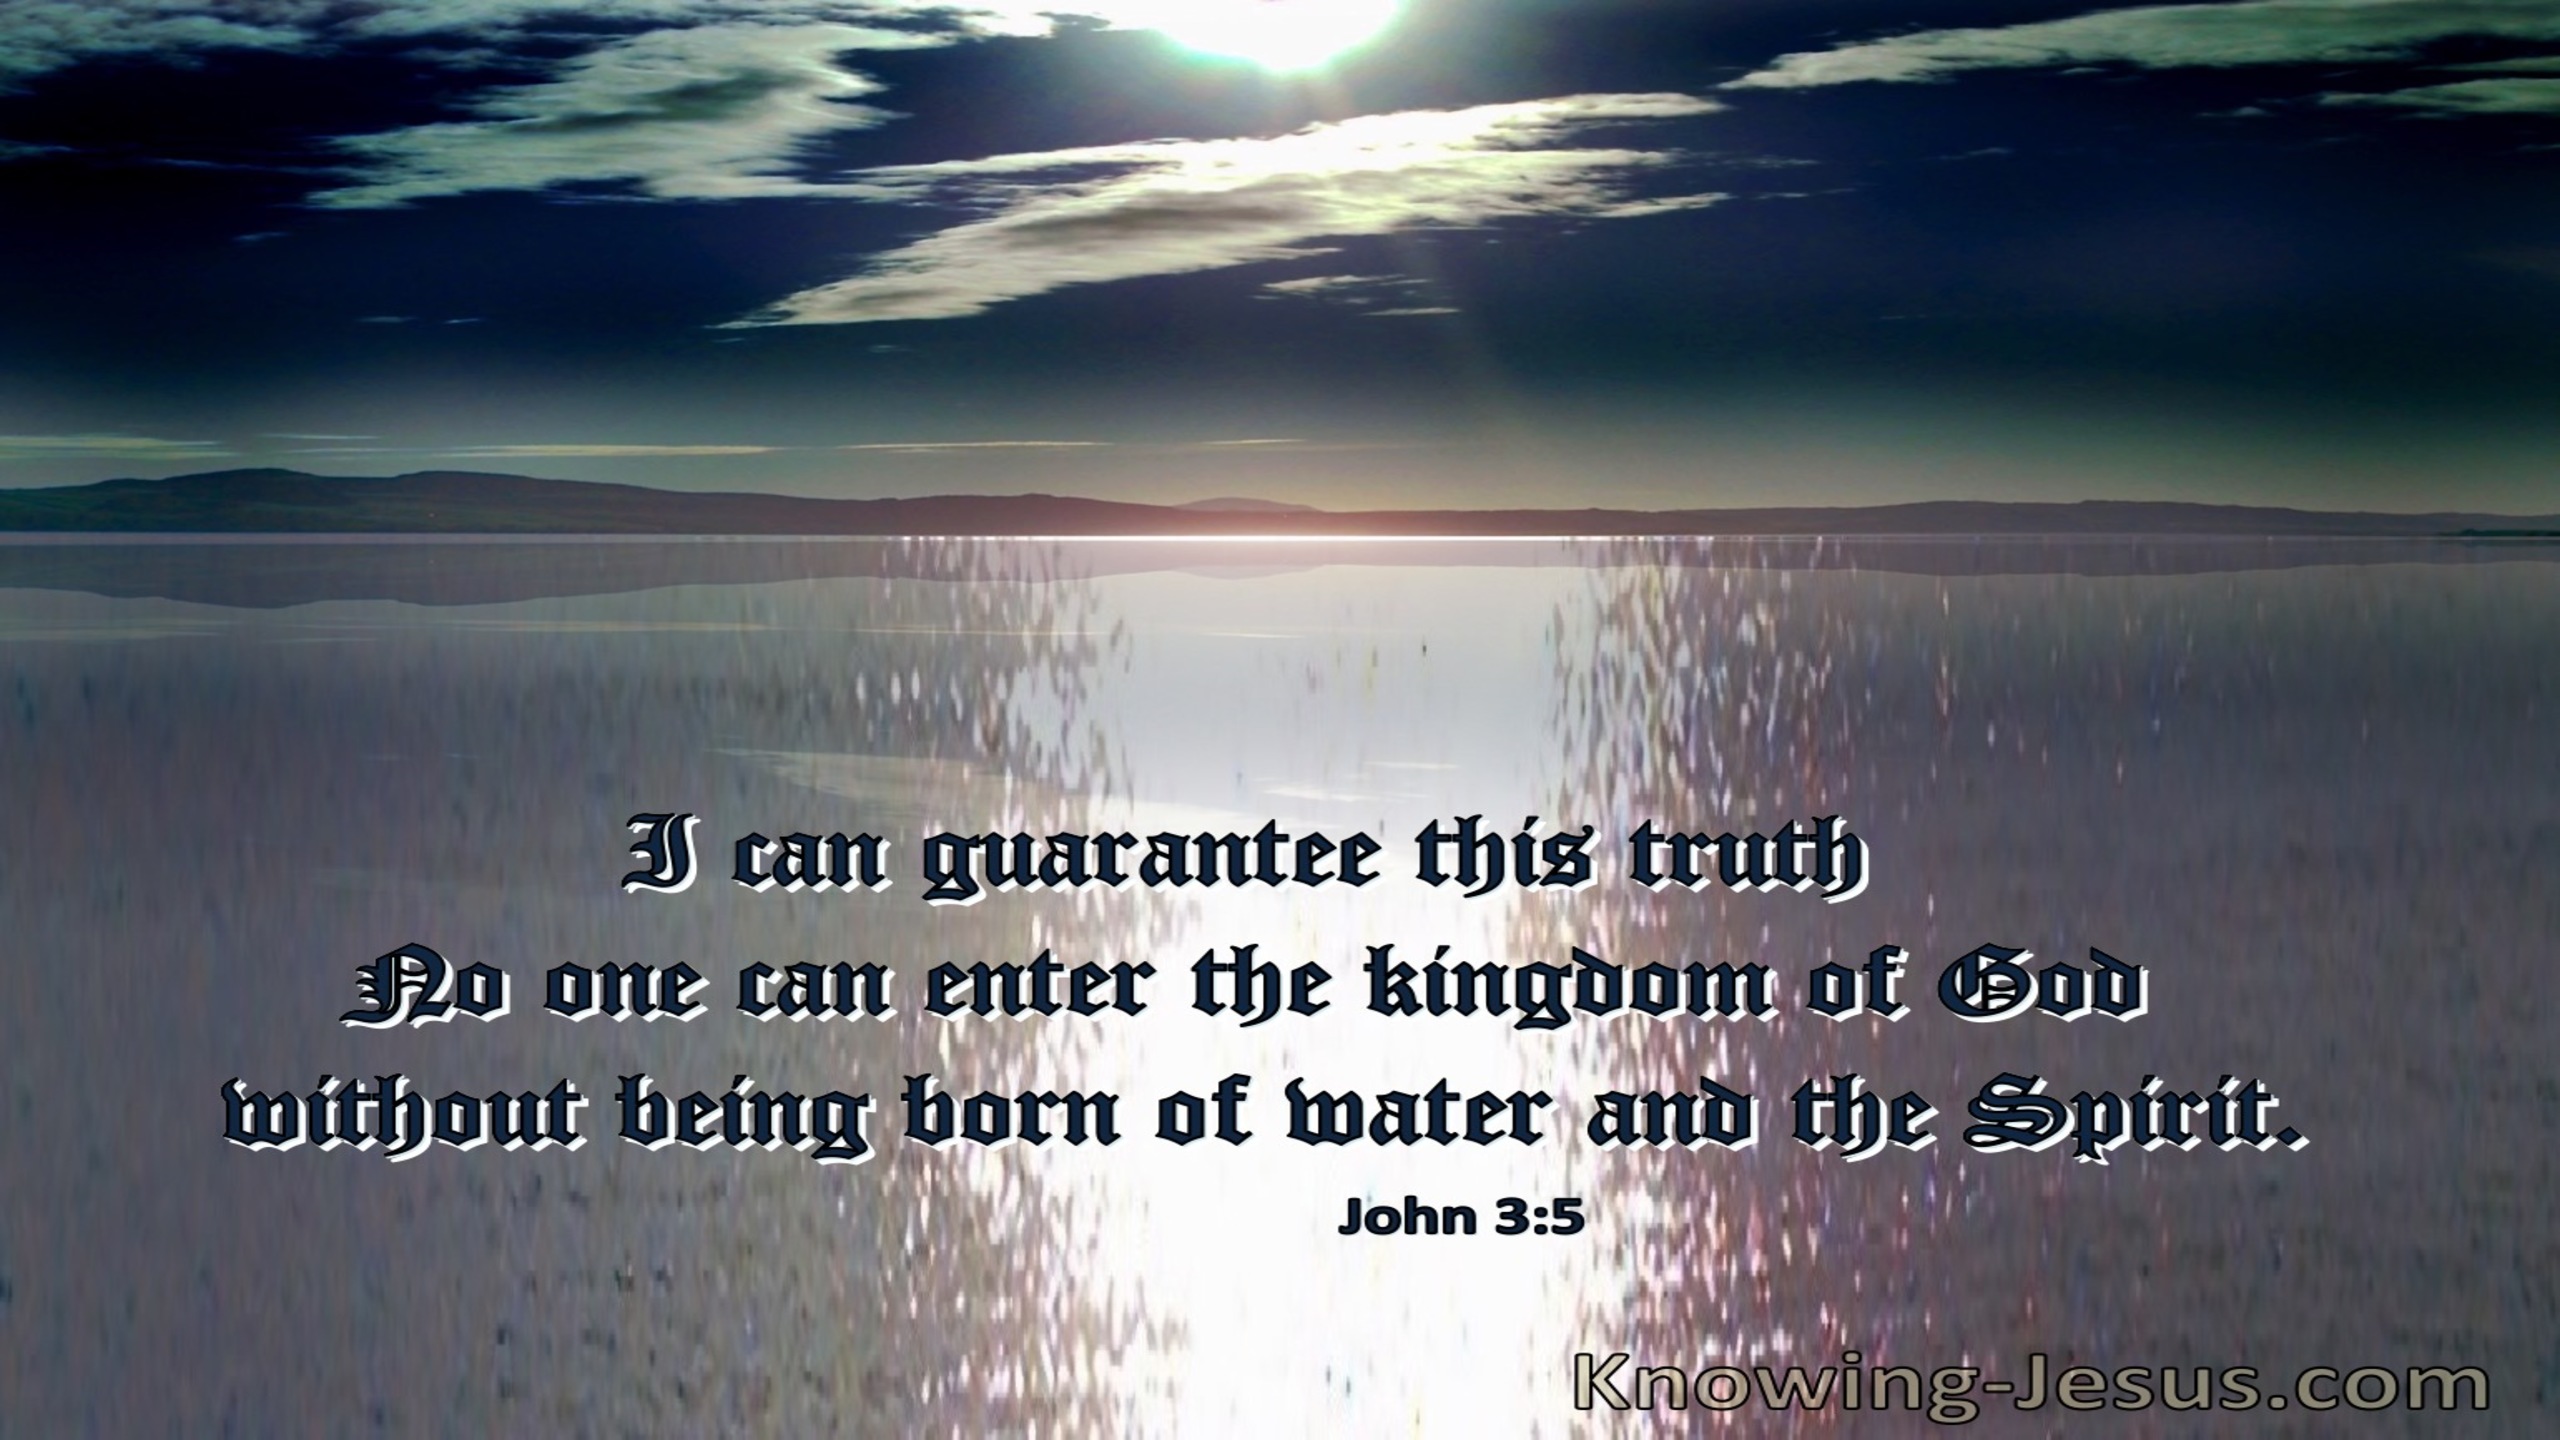 John 3:5 Born Of Water And The Spirit (windows)02:24